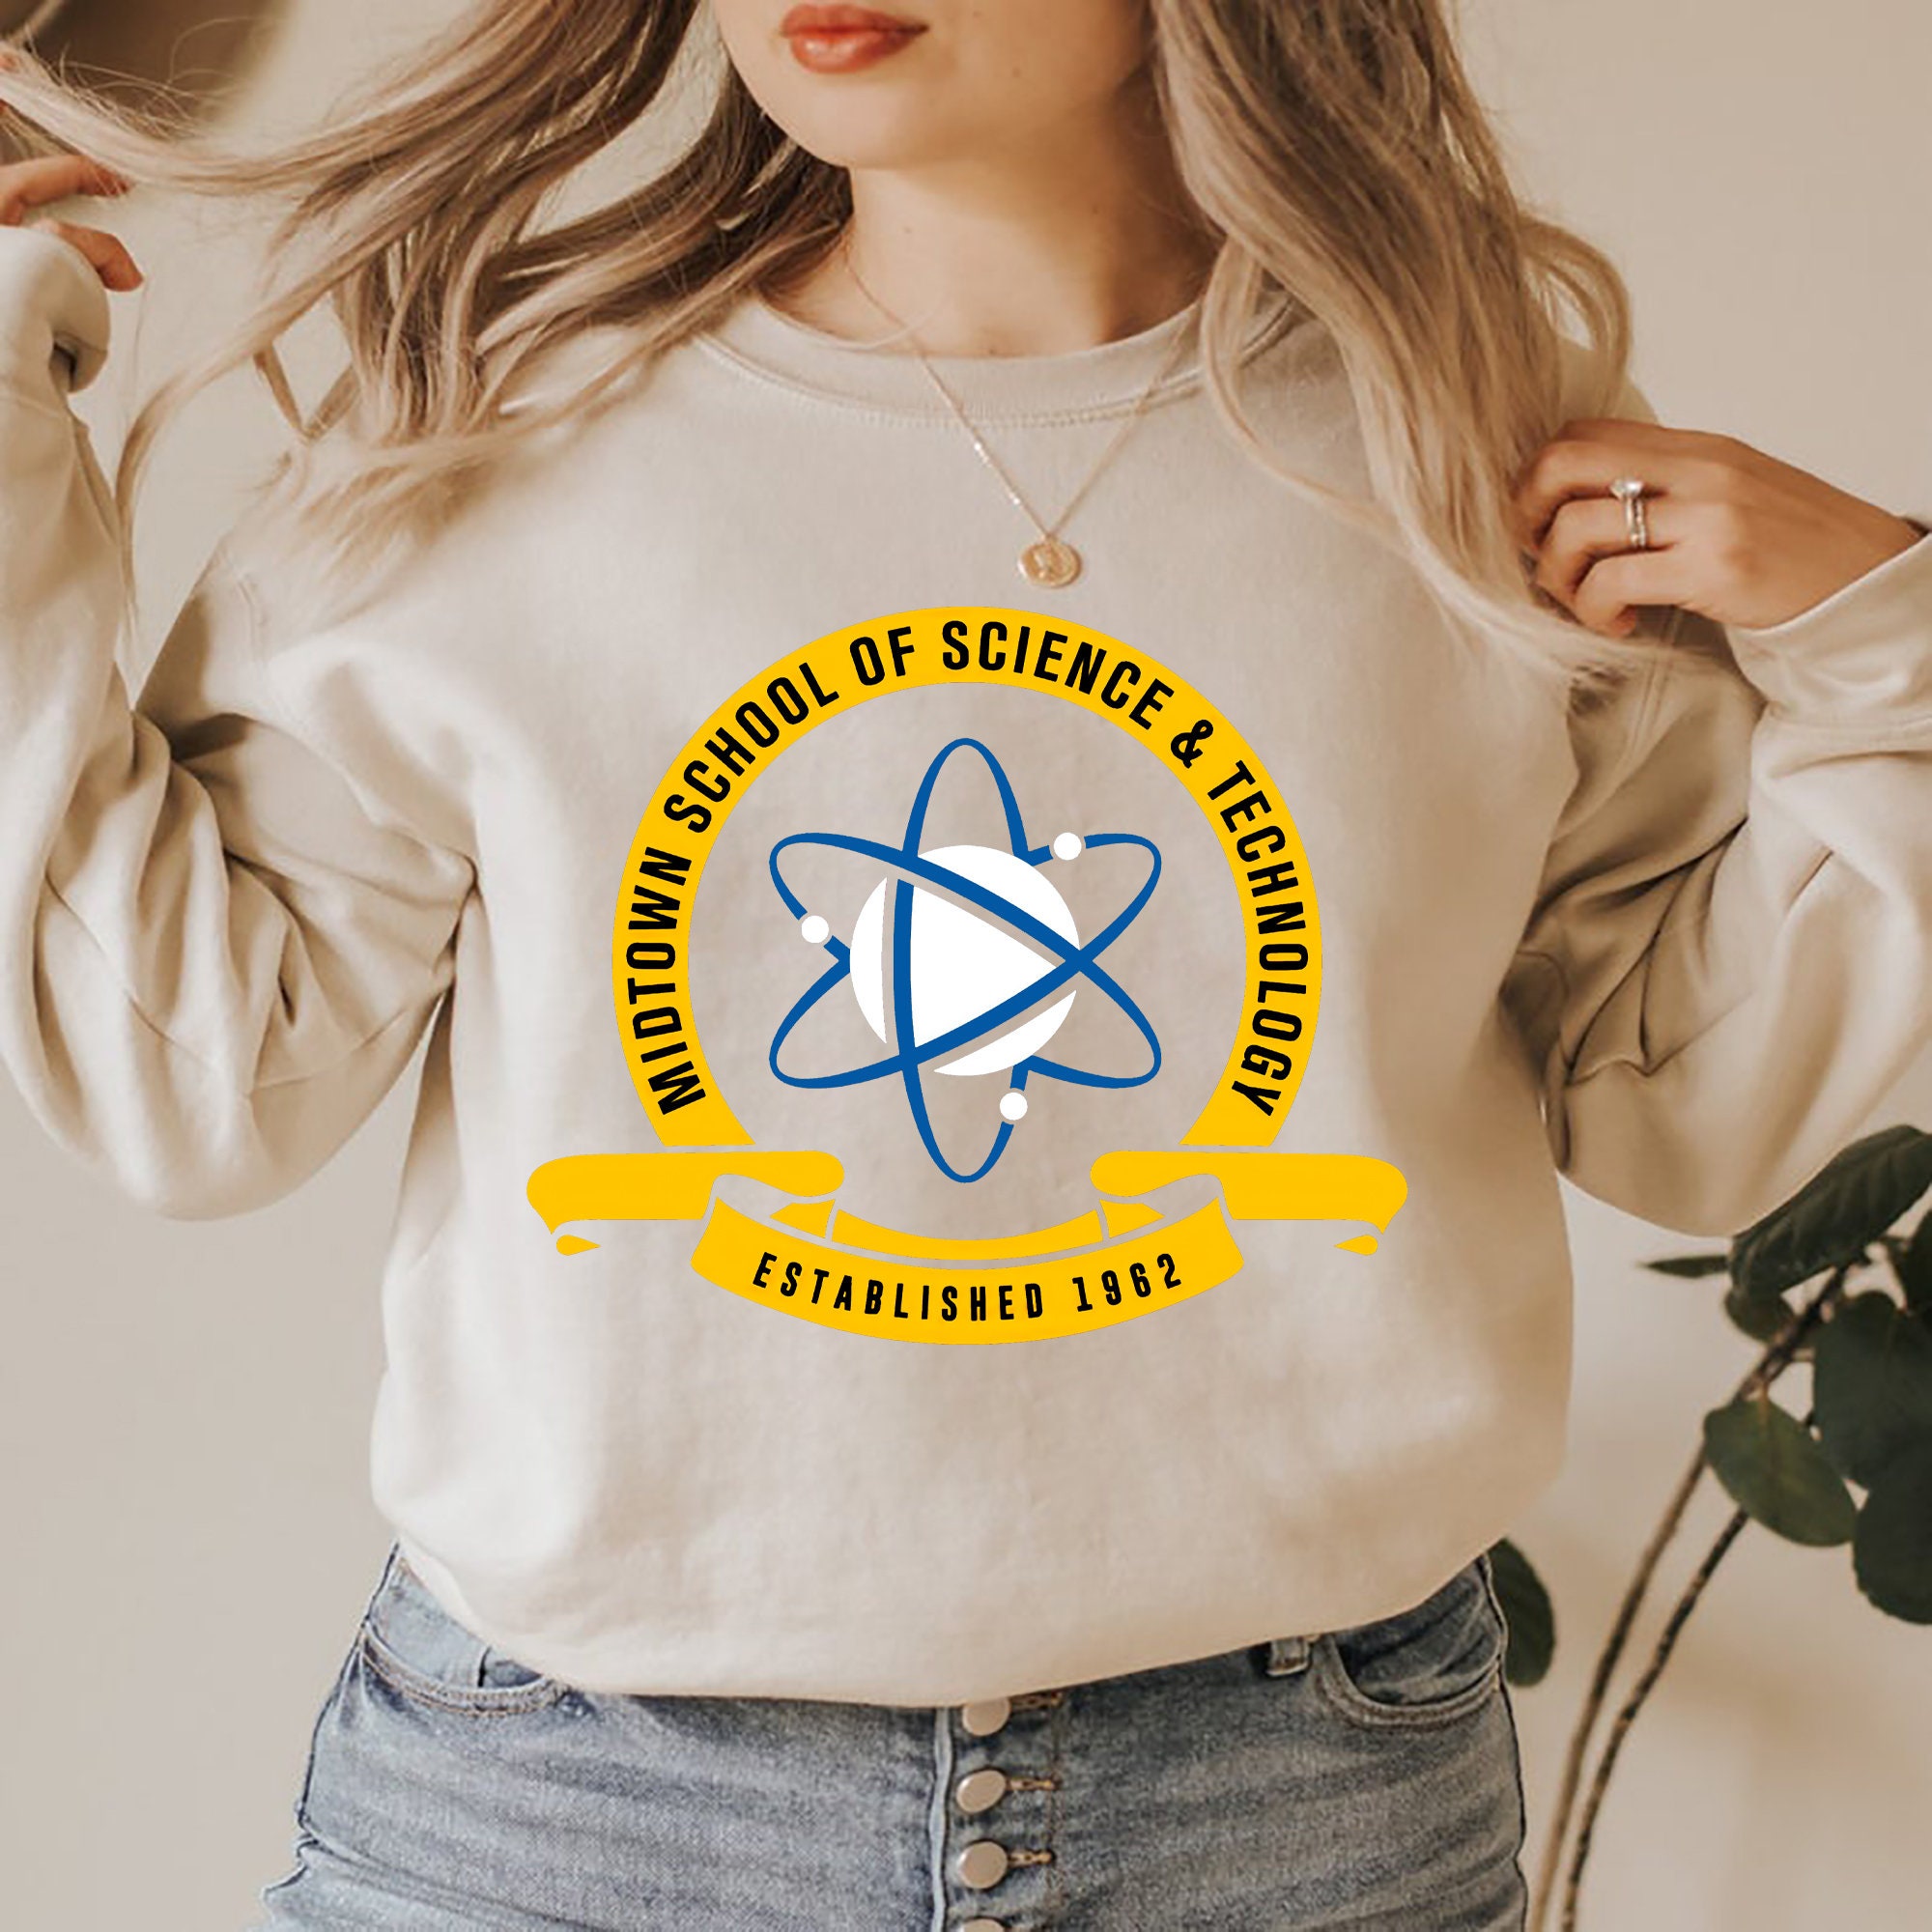 Midtown School Of Science And Technology Established 1962 Unisex Sweatshirt